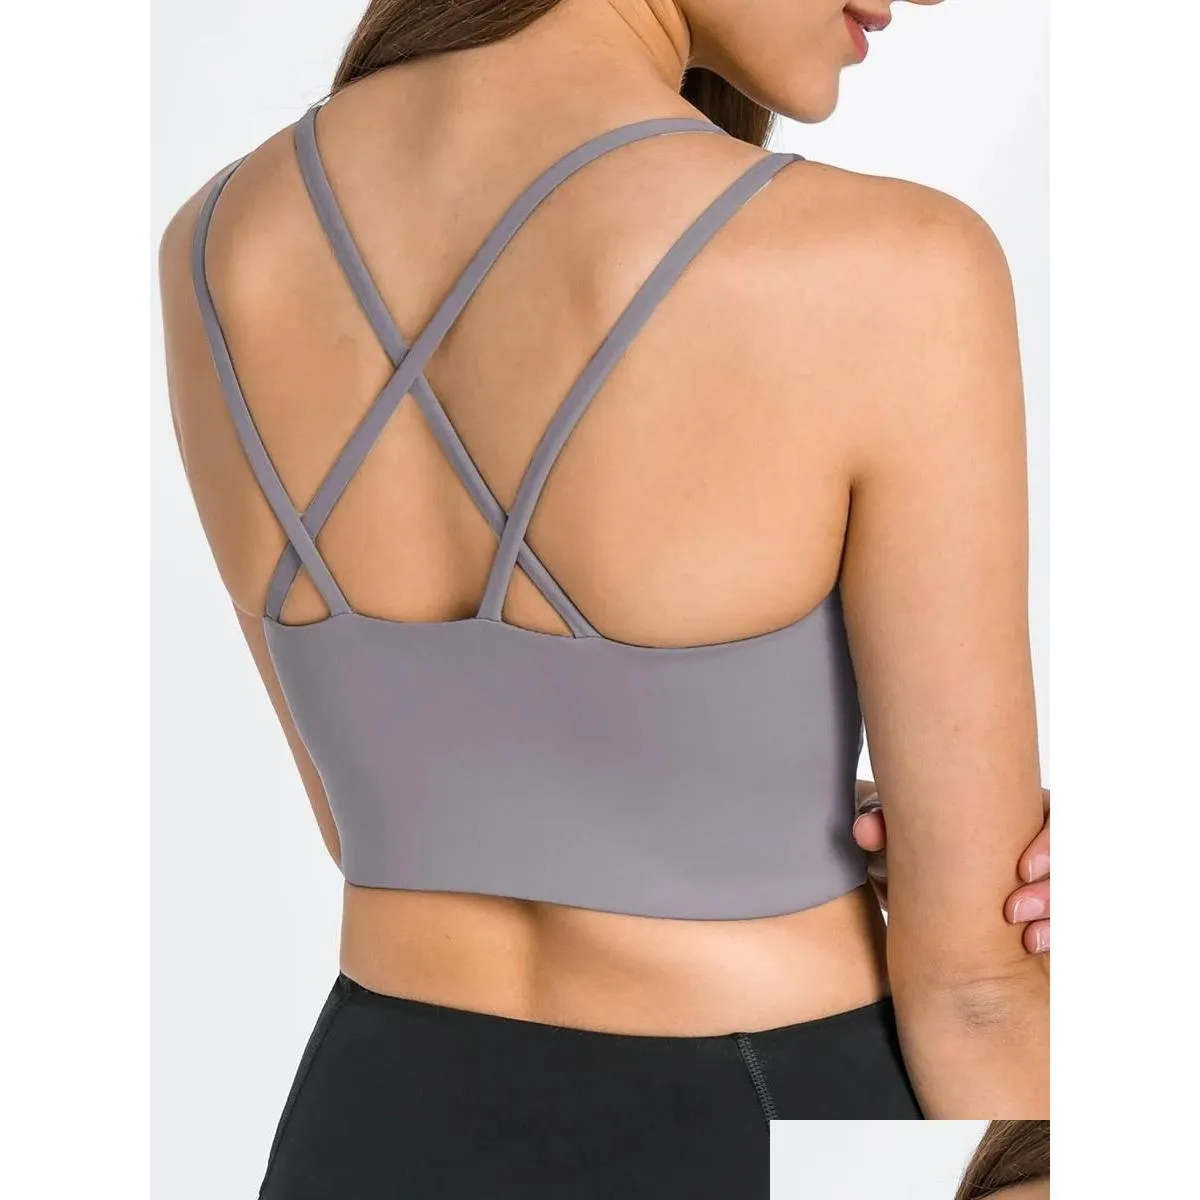 set nepoagym brave women strappy longline sports bras cross back medium support soft yoga bra push up naked feel gym bra